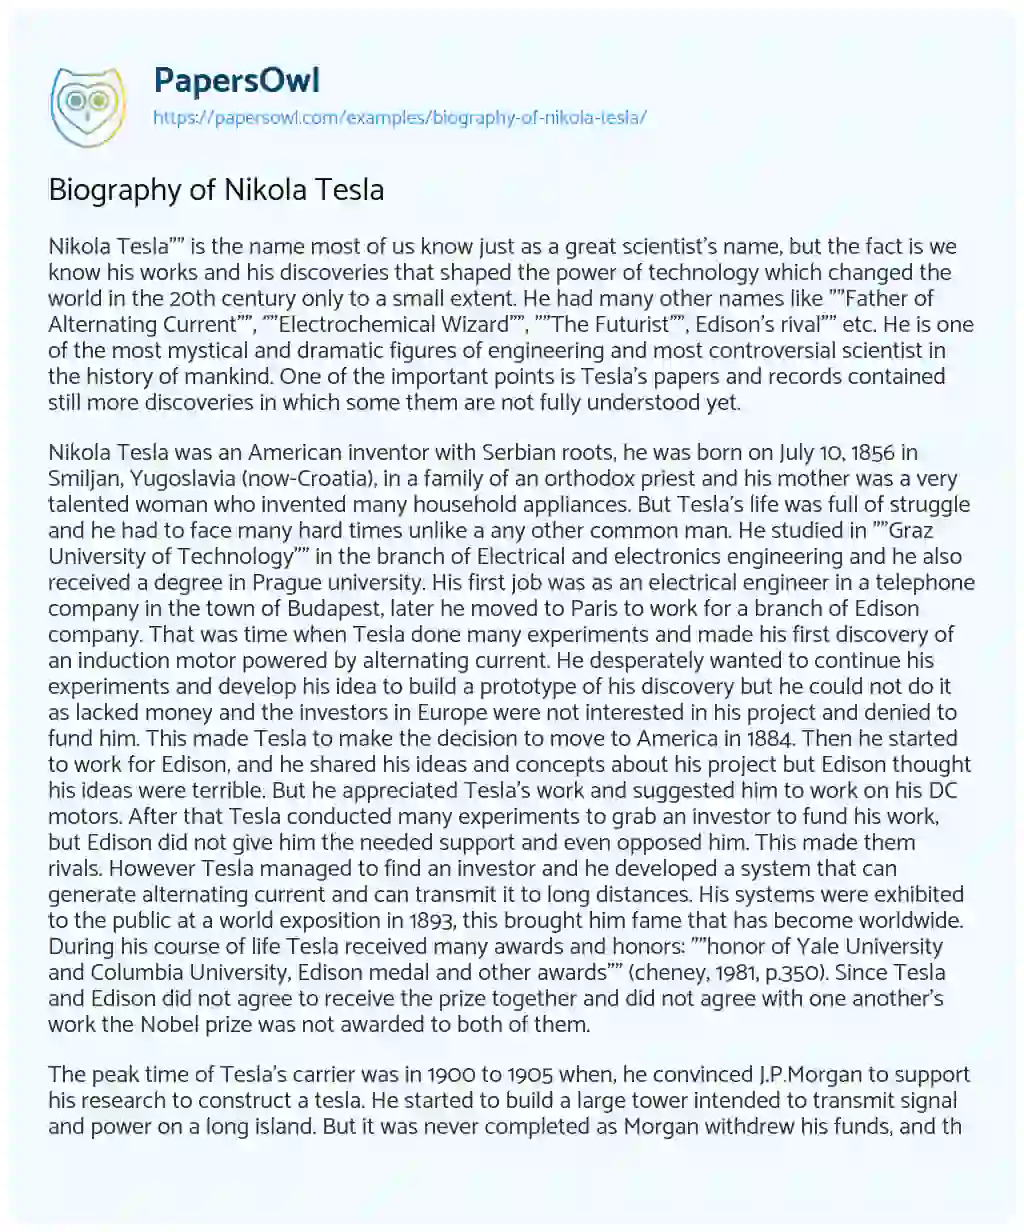 Essay on Biography of Nikola Tesla